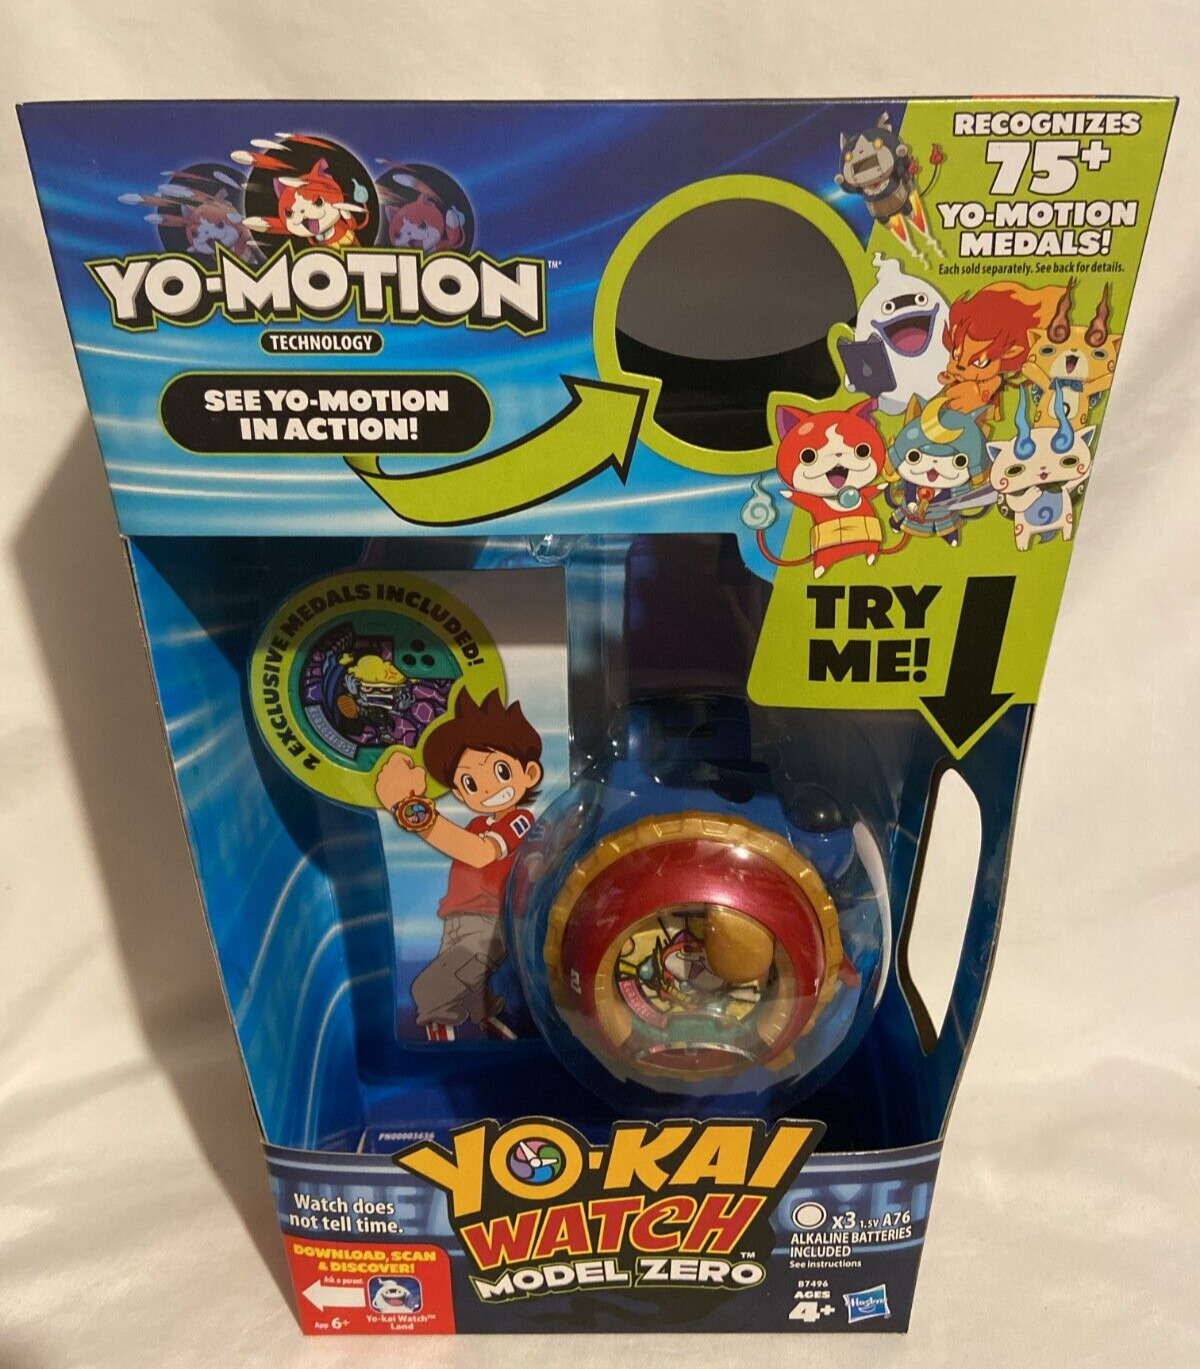 Yokai Yo-kai Watch Model Zero new recognizes 75+ yo-motion medals